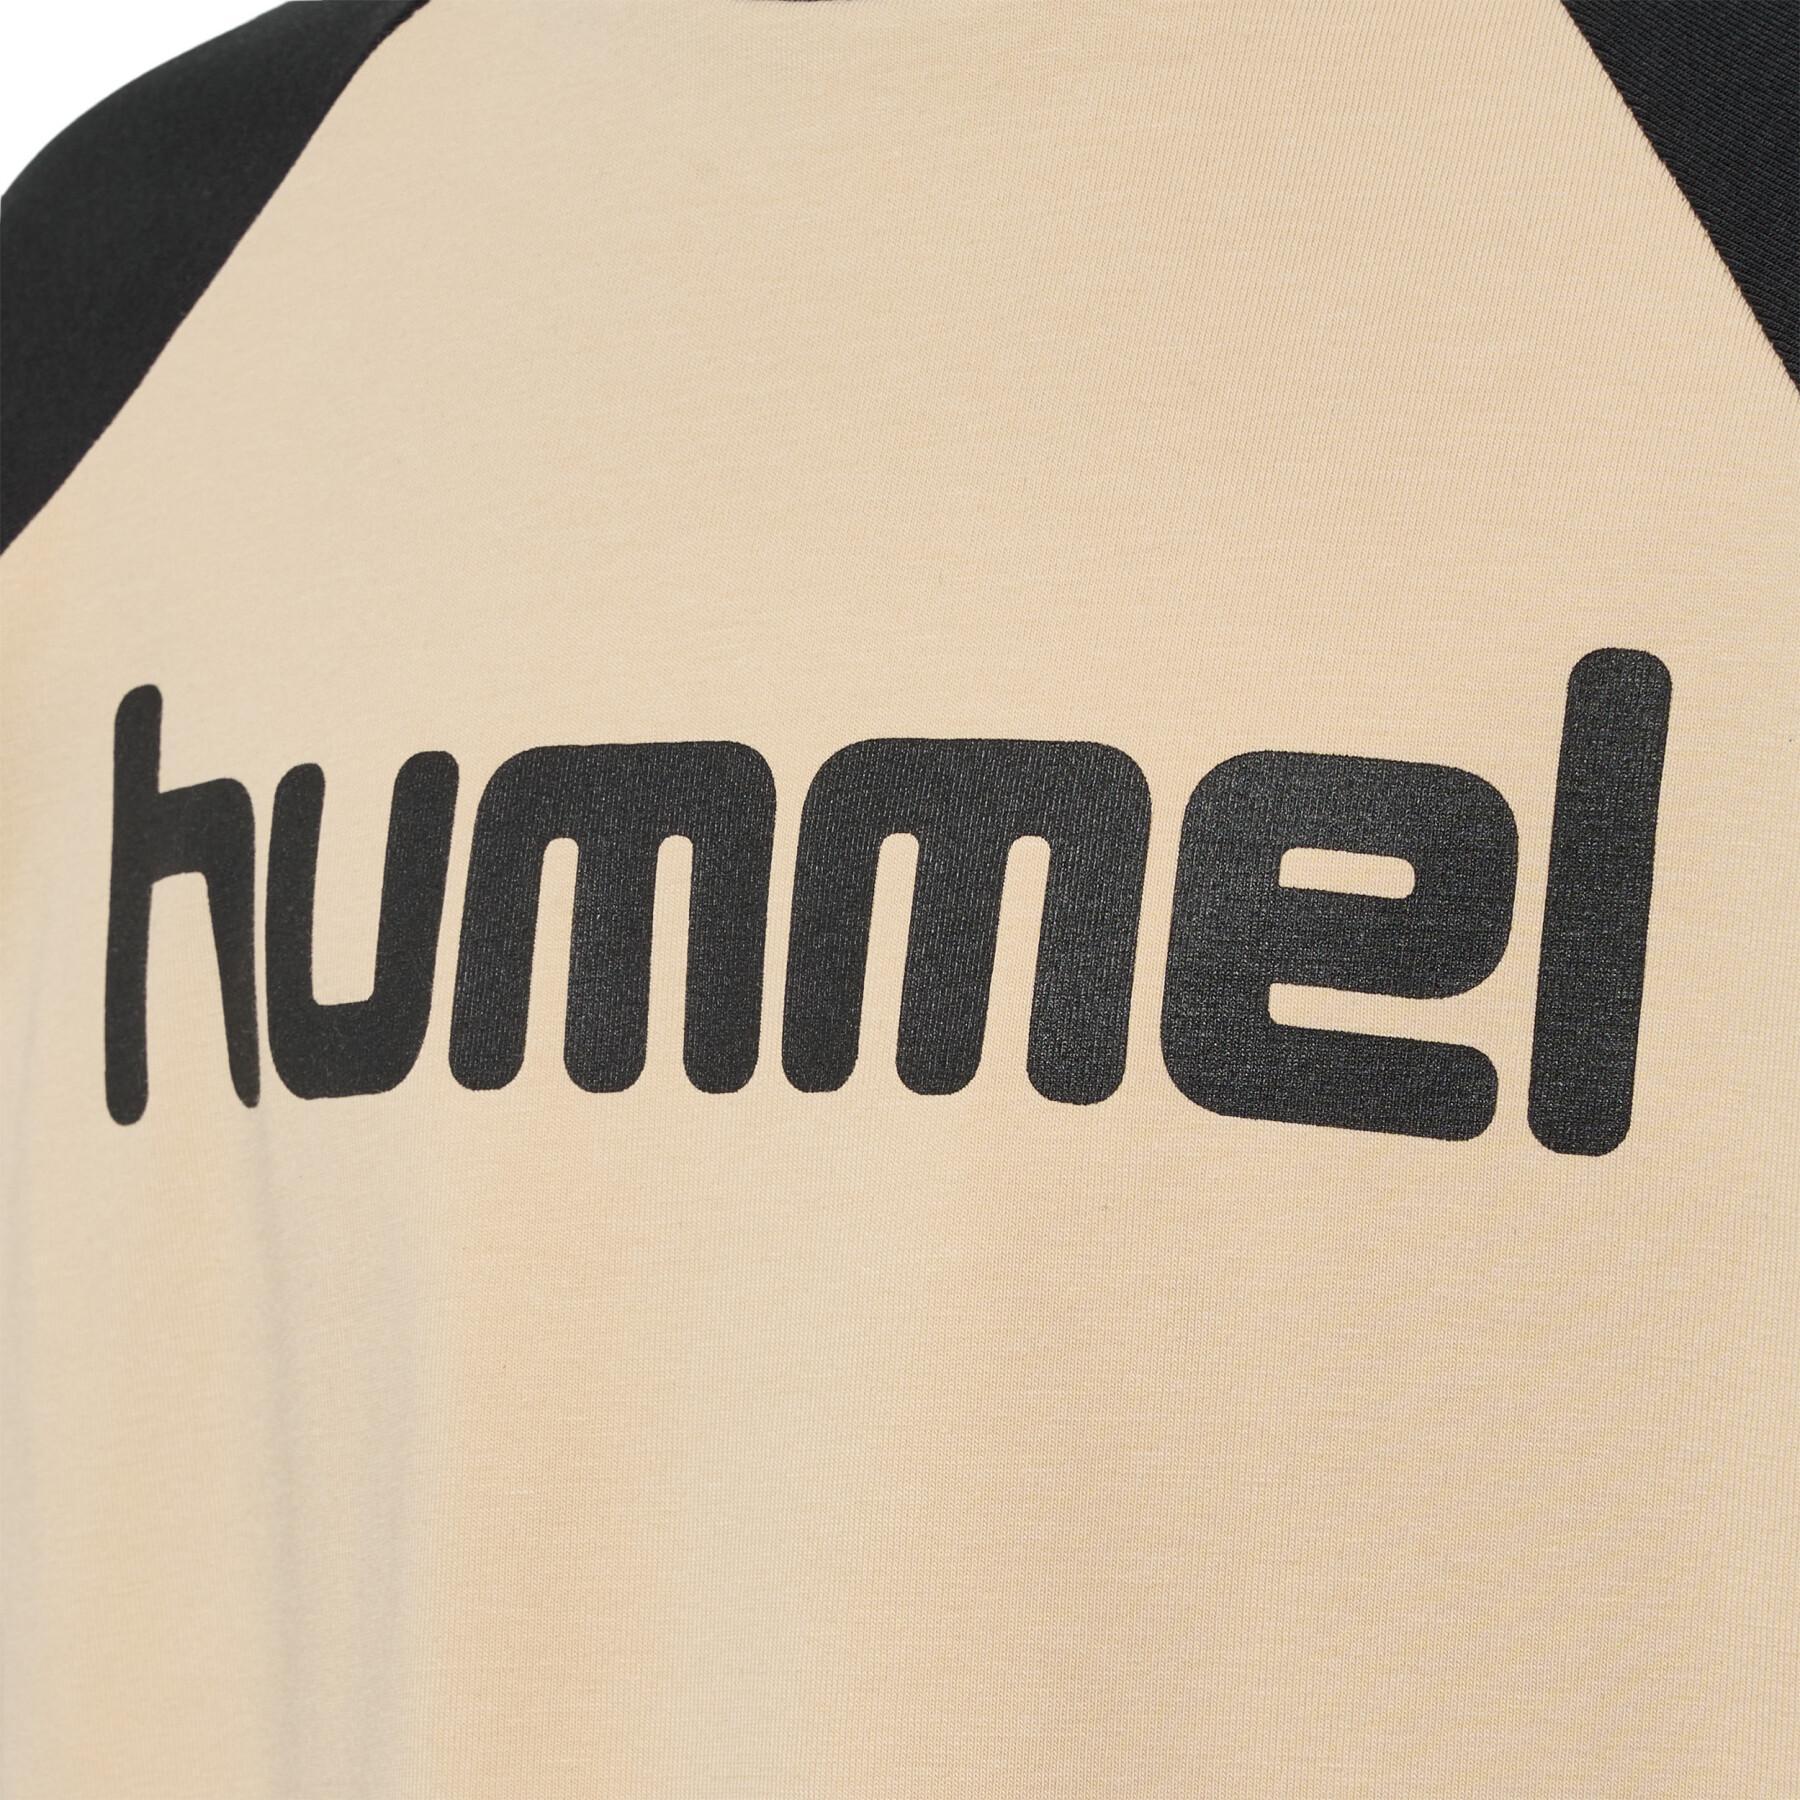 Kinder-T-shirt met lange mouwen Hummel